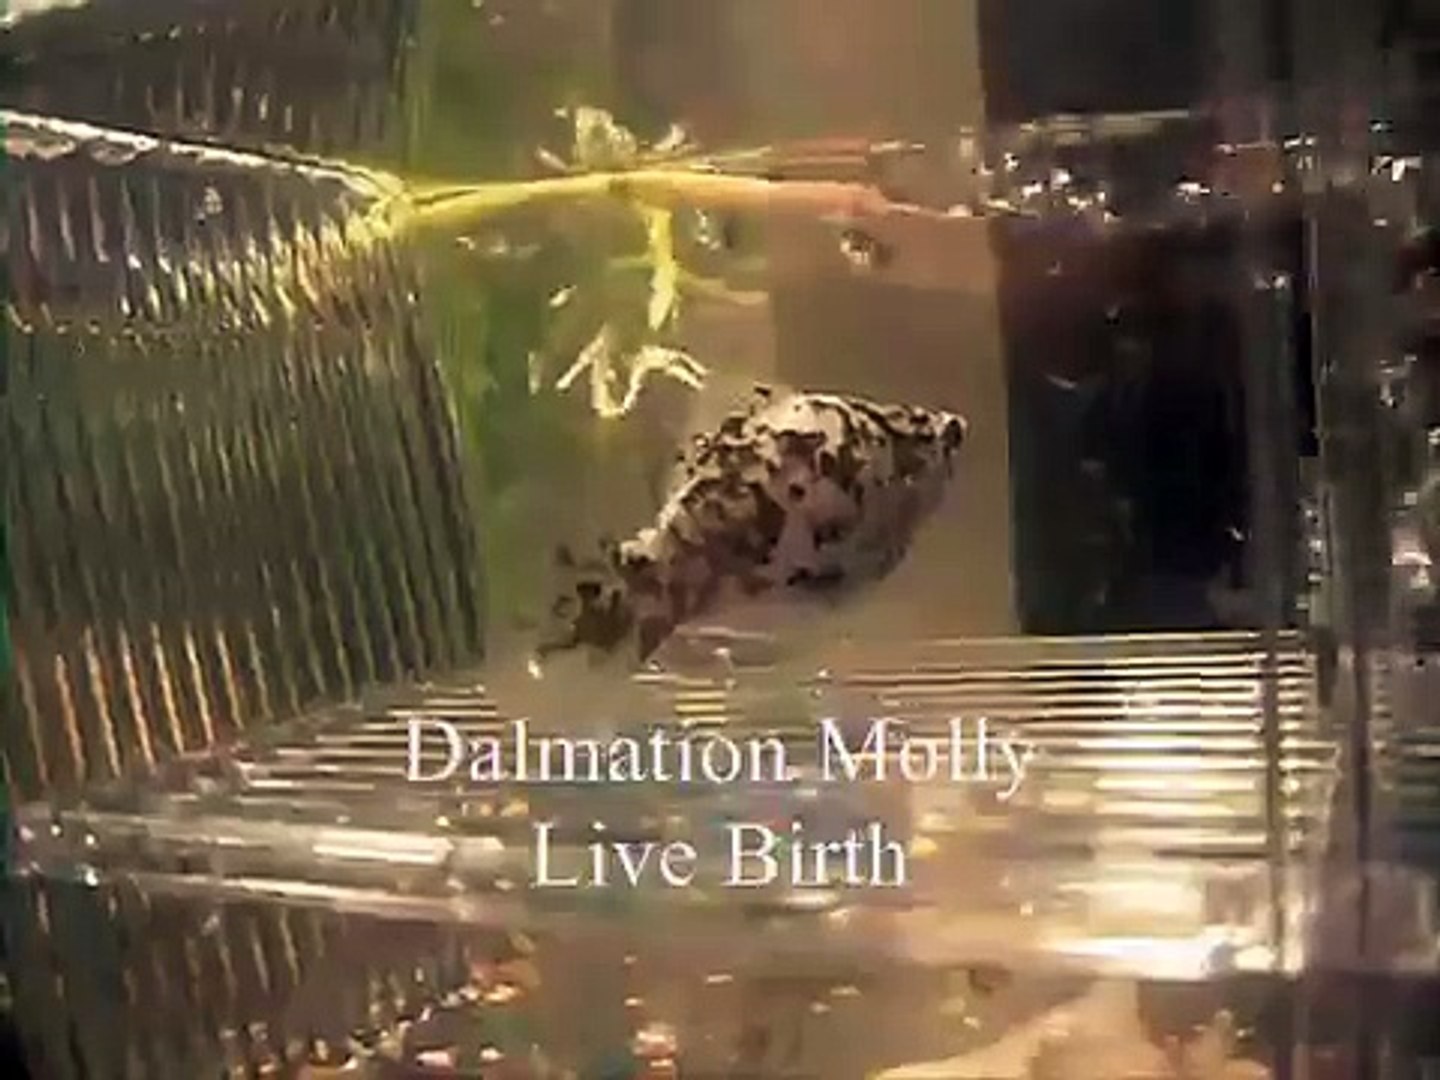 Dalmatian Molly giving birth